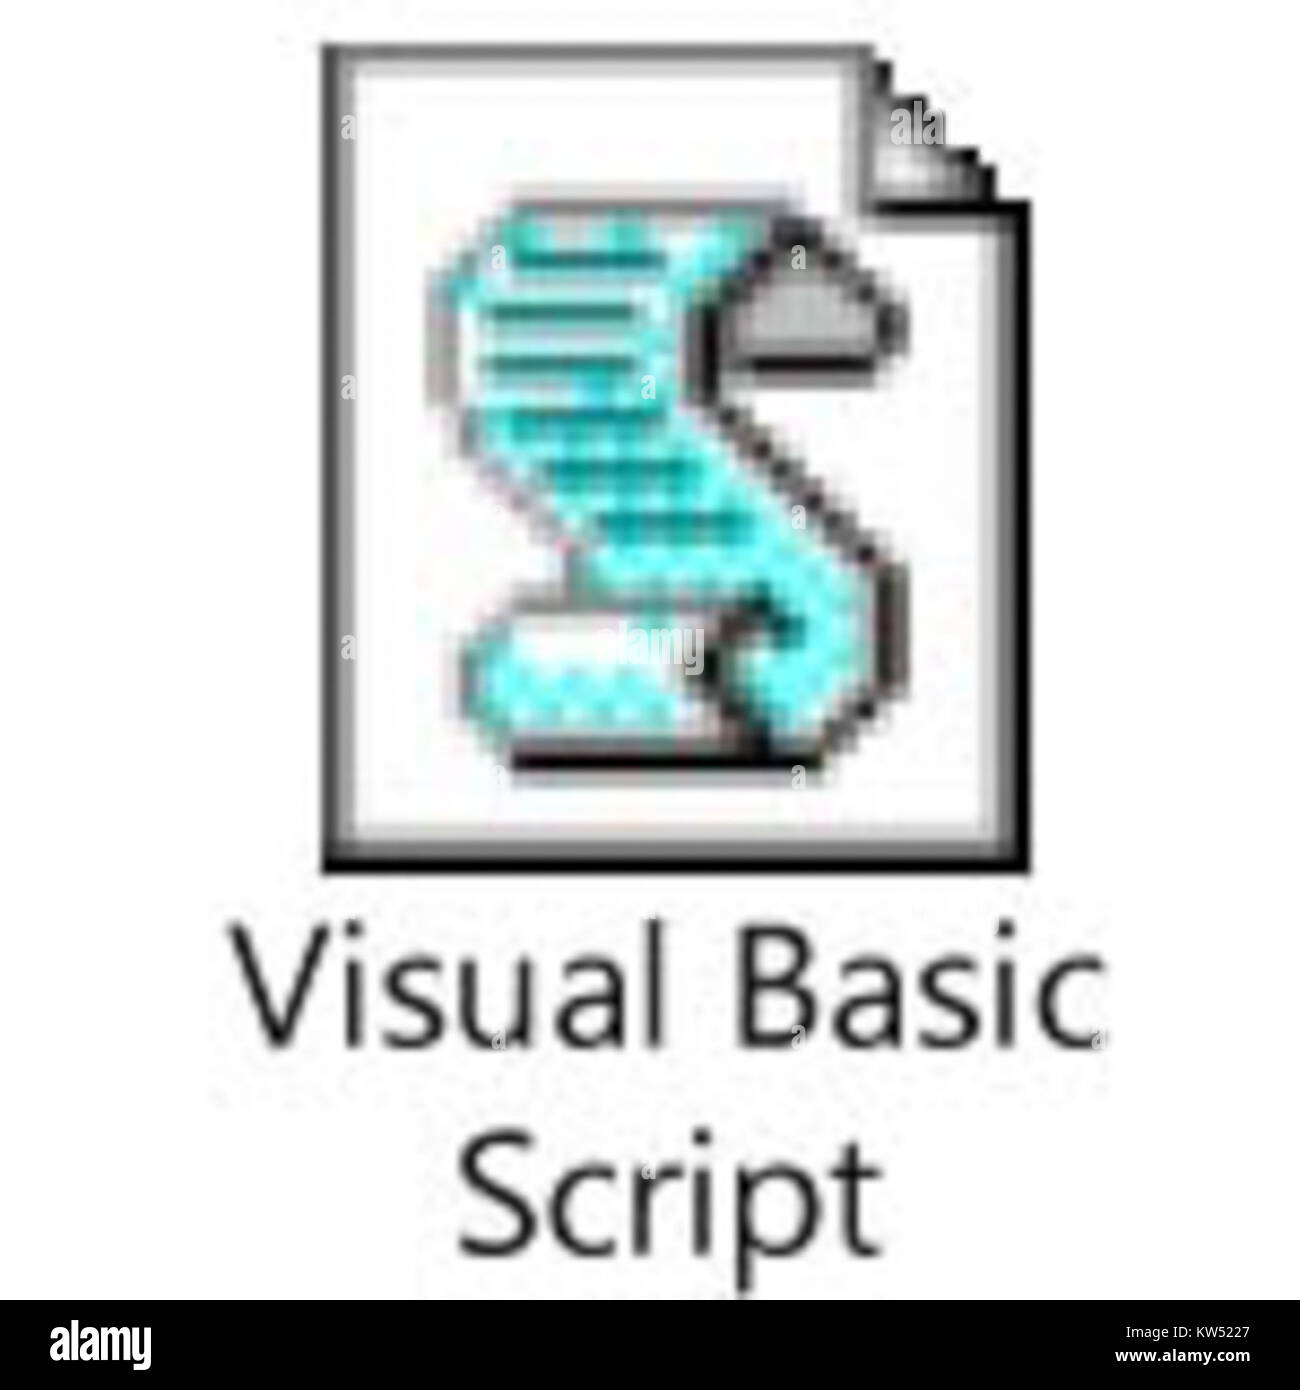 Visual basic script 1 Stock Photo